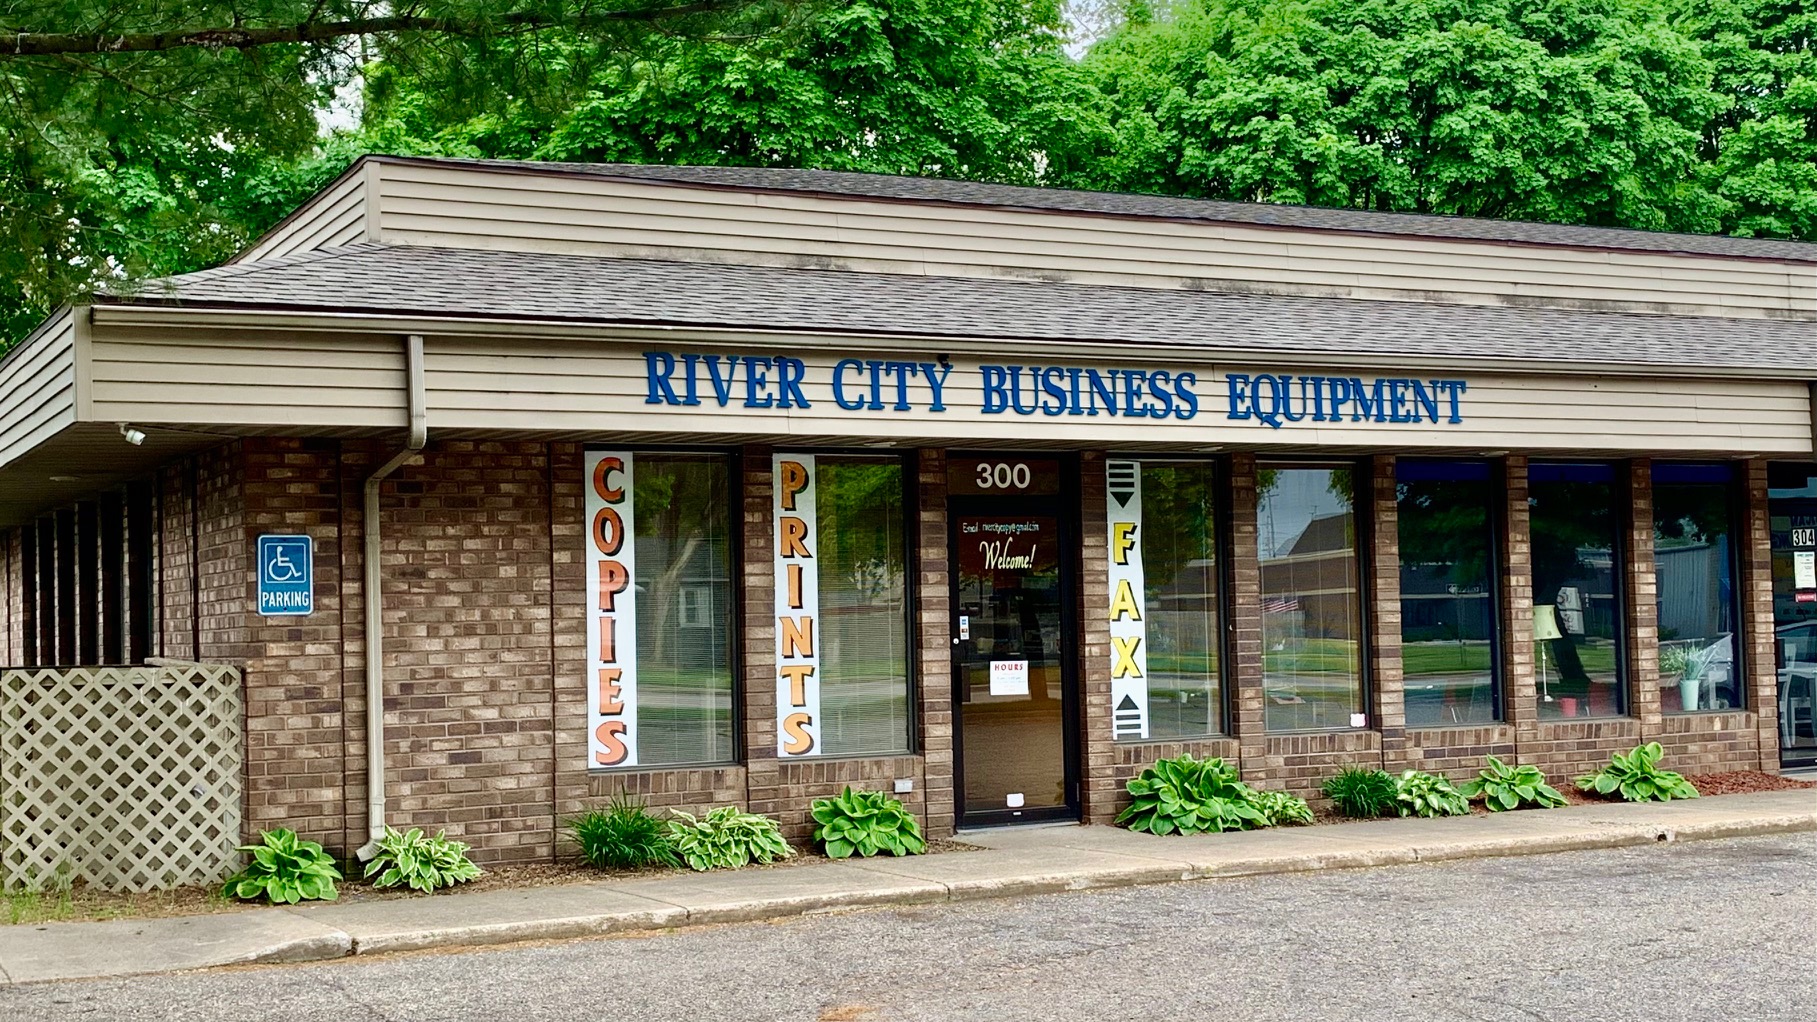 River City Business Equipment